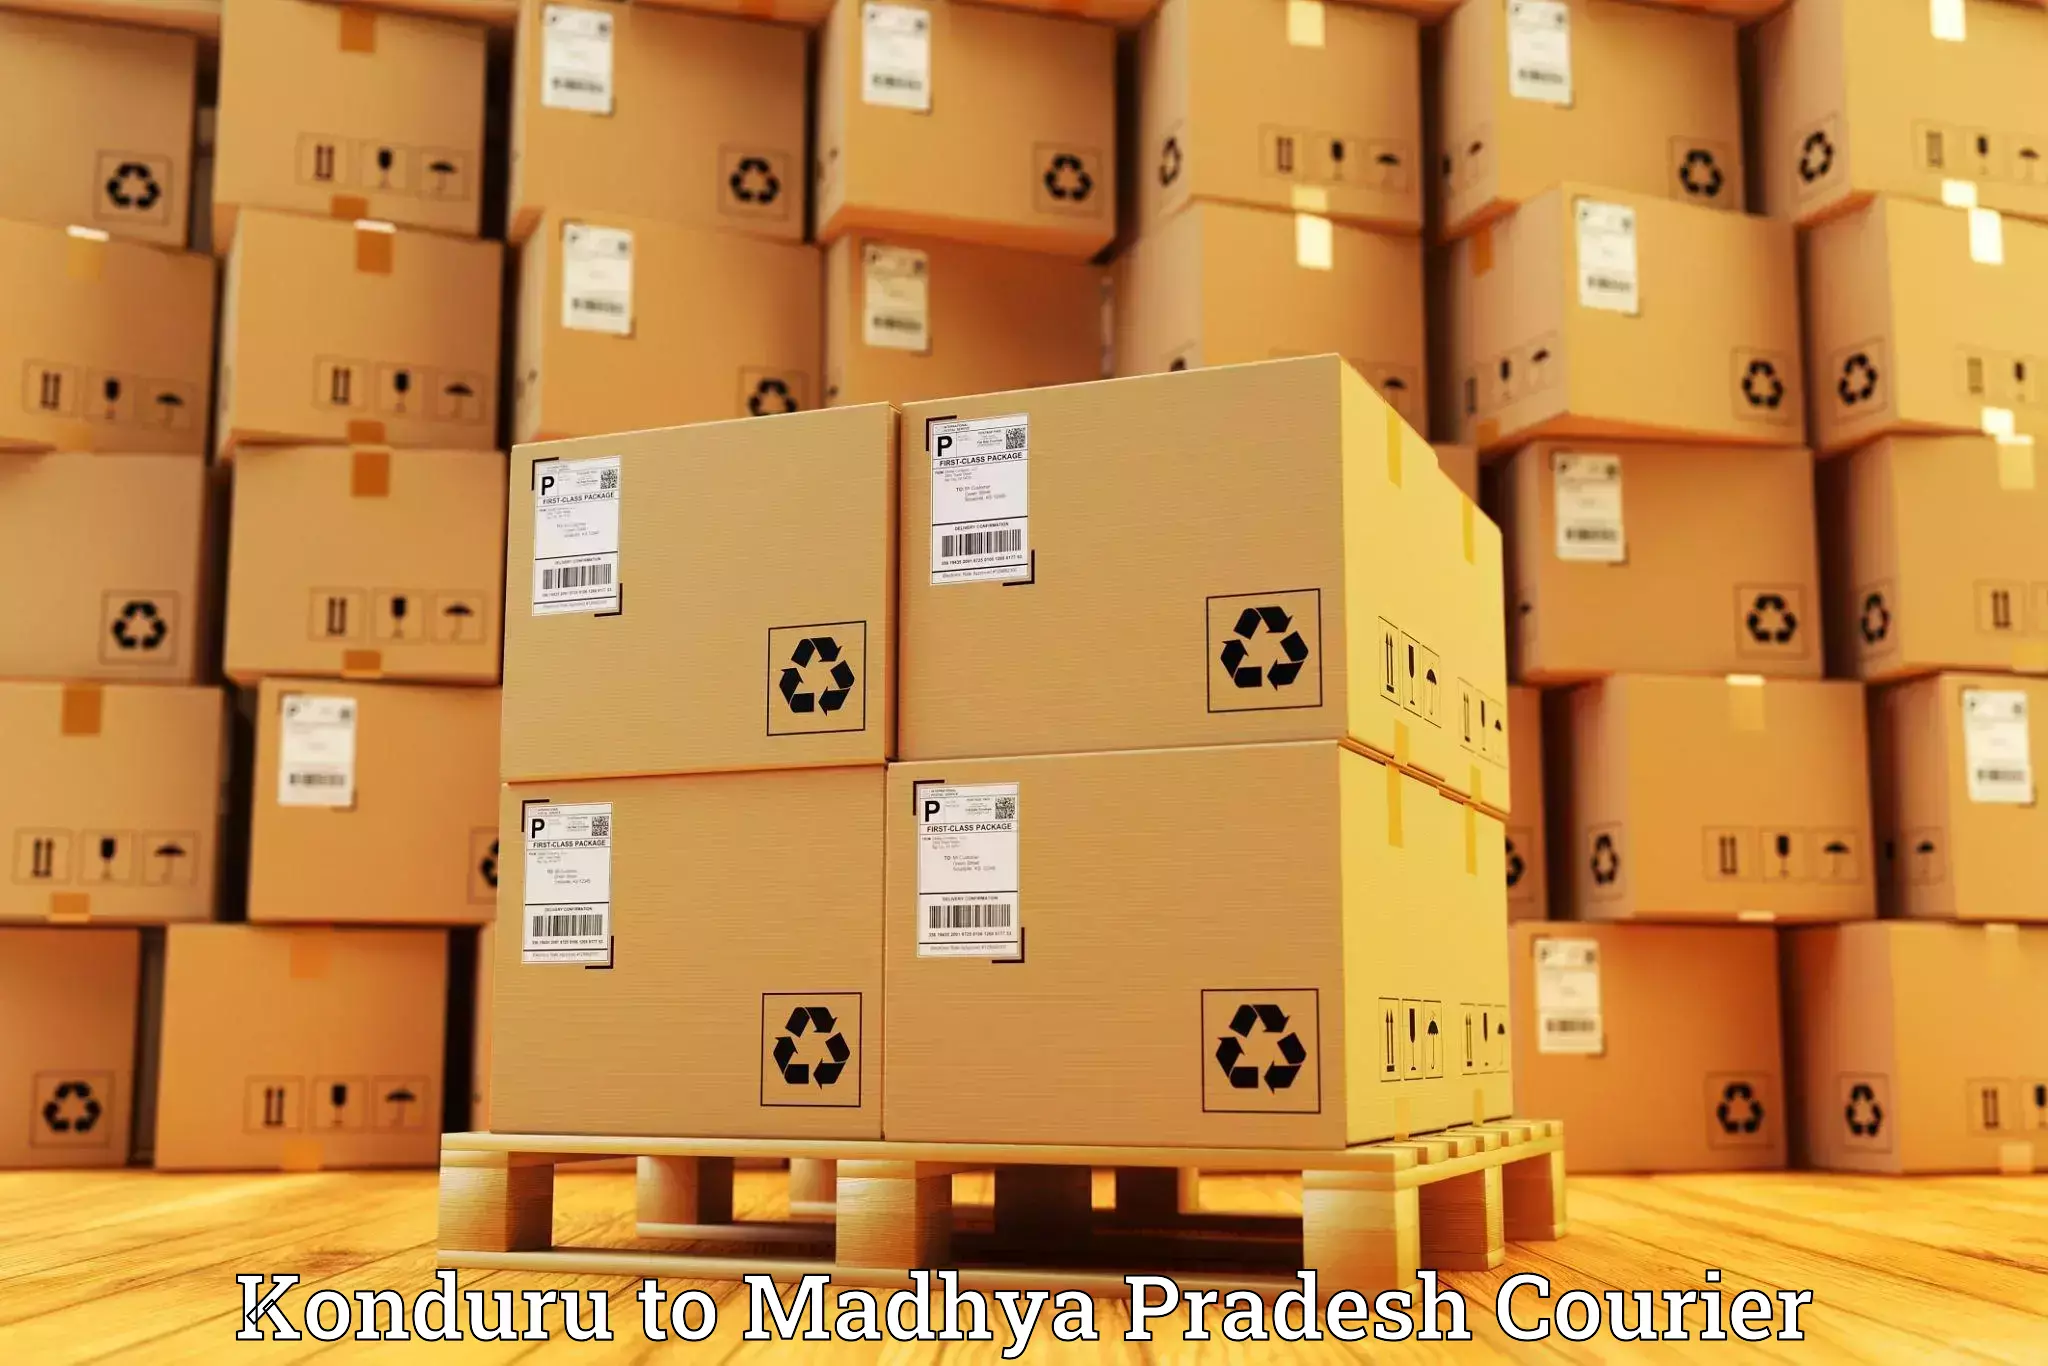 Cargo delivery service in Konduru to Indore